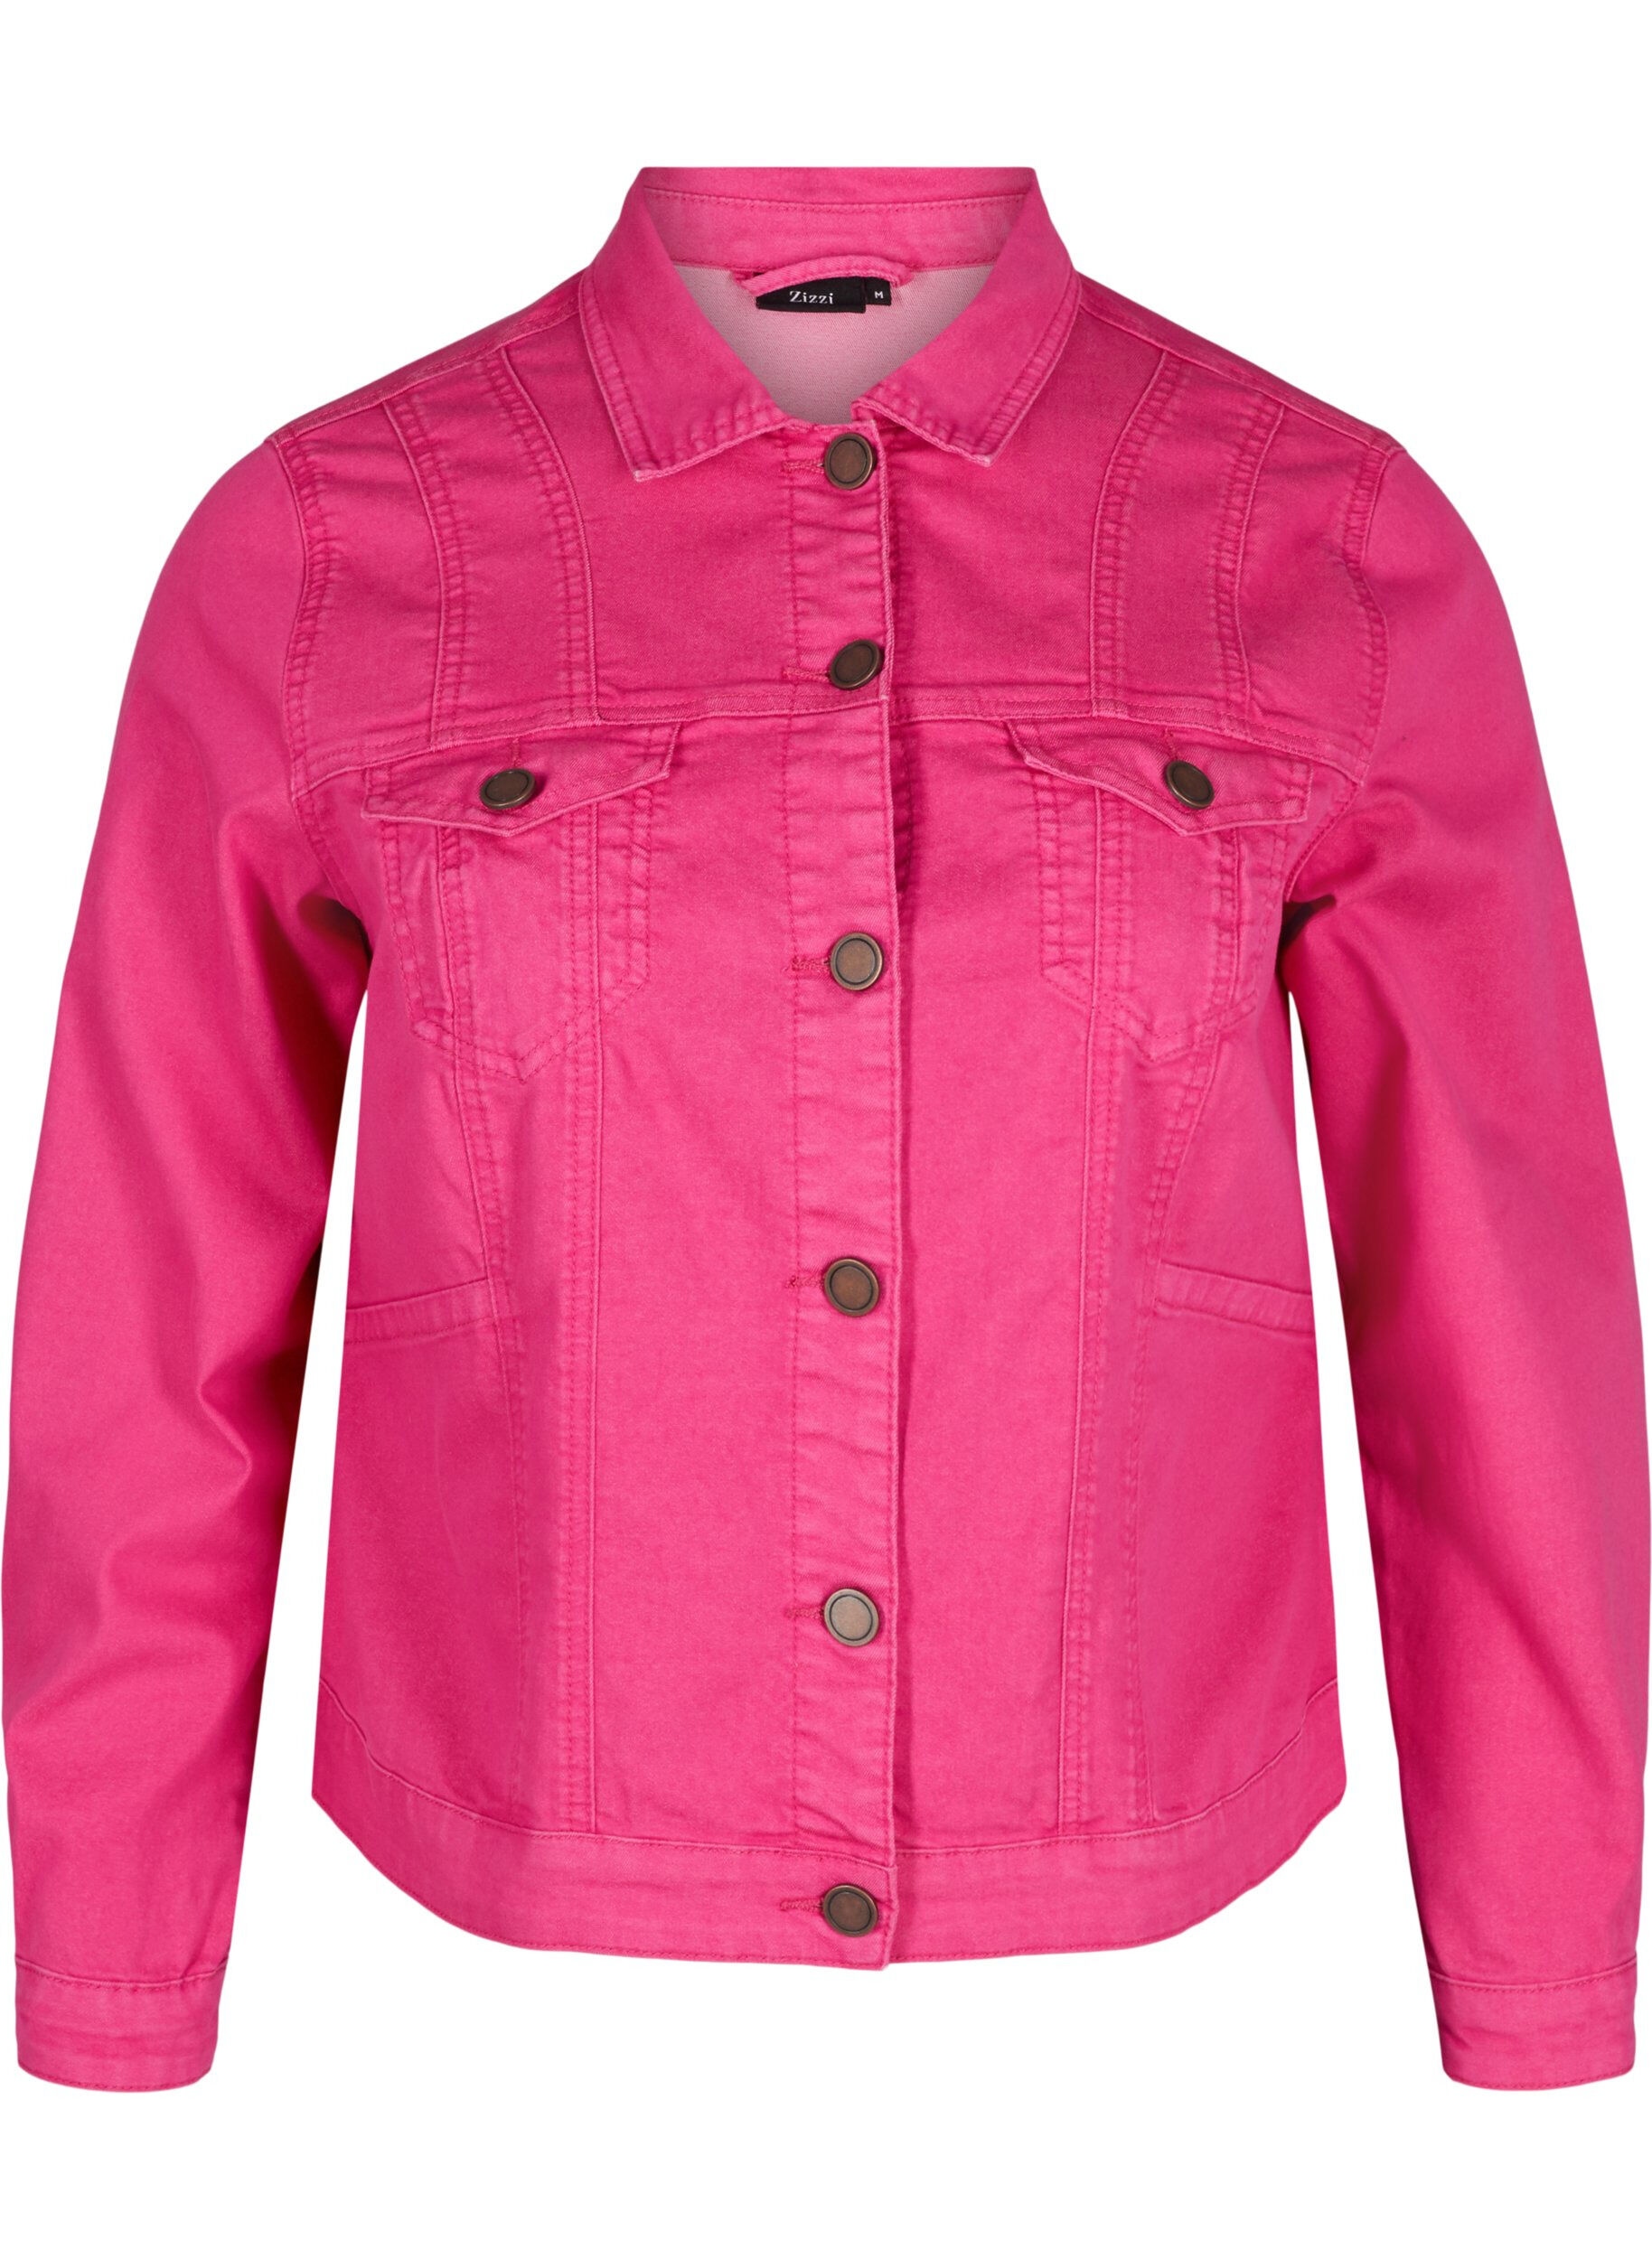 Denim Jacket For Girls 2020 | Girls Jean Jacket | Denim Jacket For Girls | Denim  Jacket|Girls Jacket - YouTube